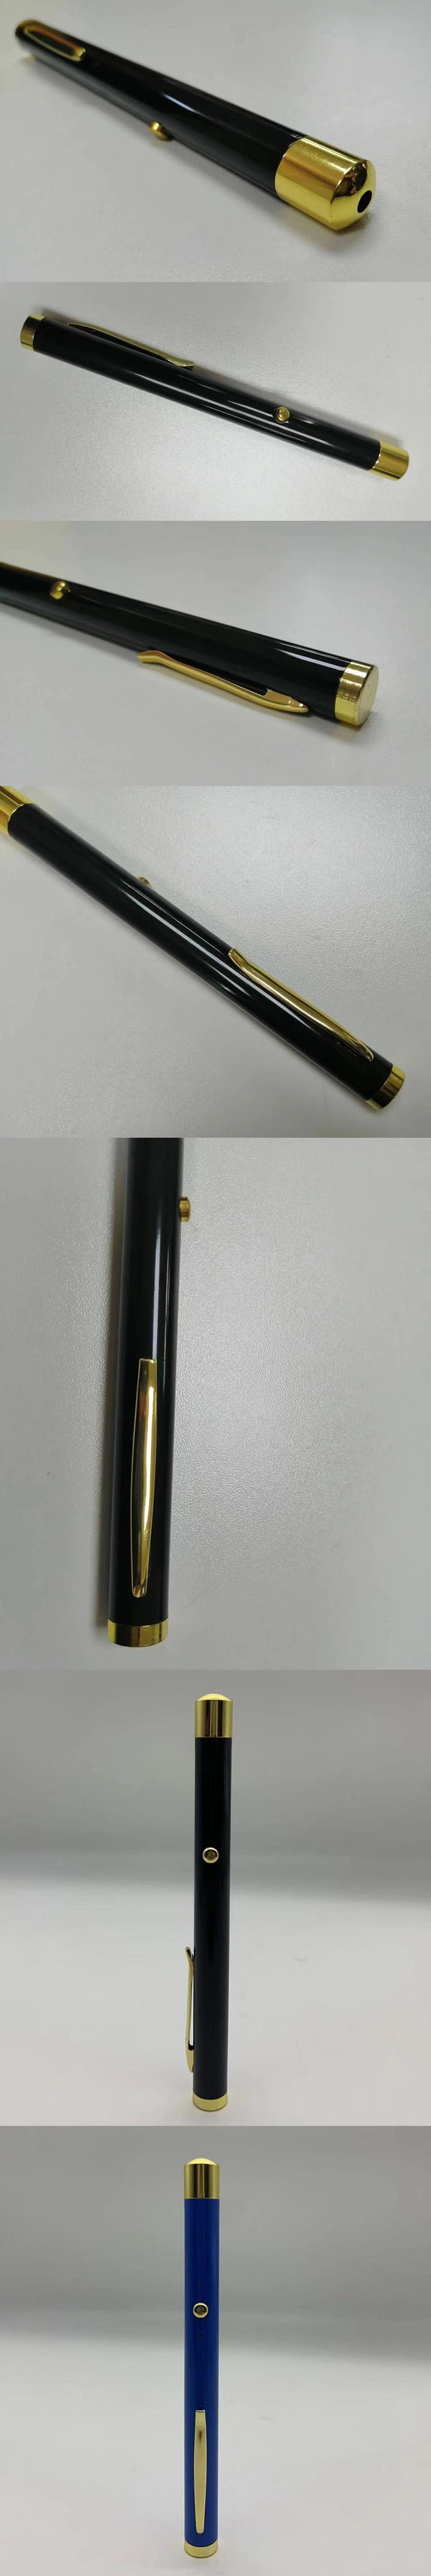 stylo laser jaune pas cher